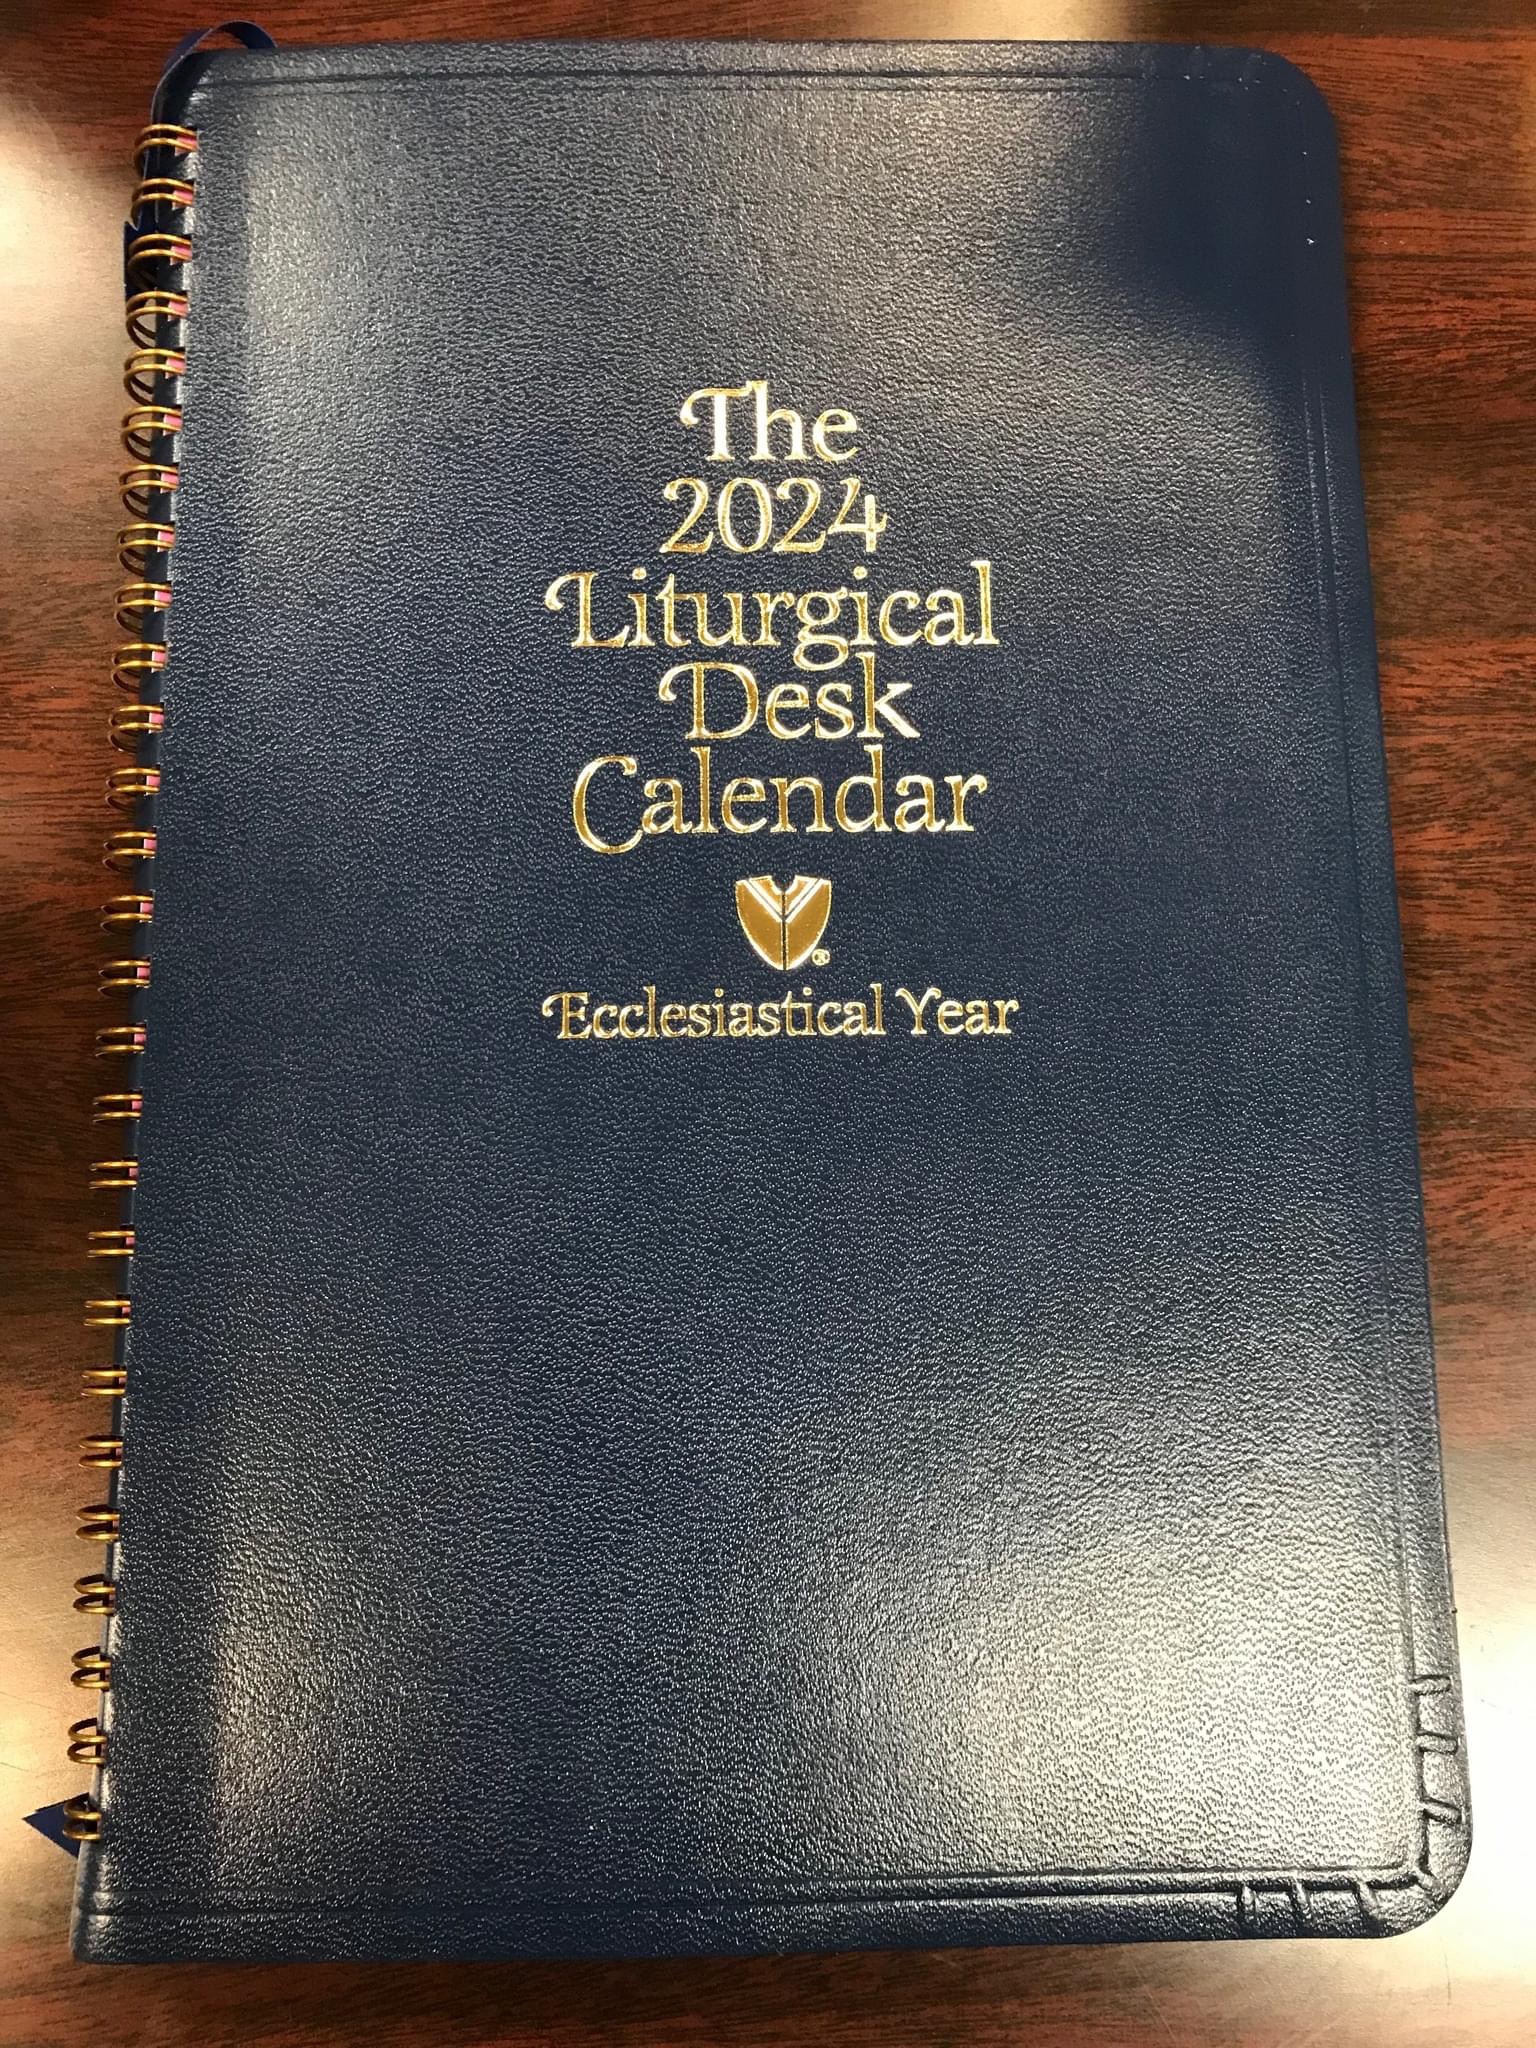 The 2024 Liturgical Desk Calendar